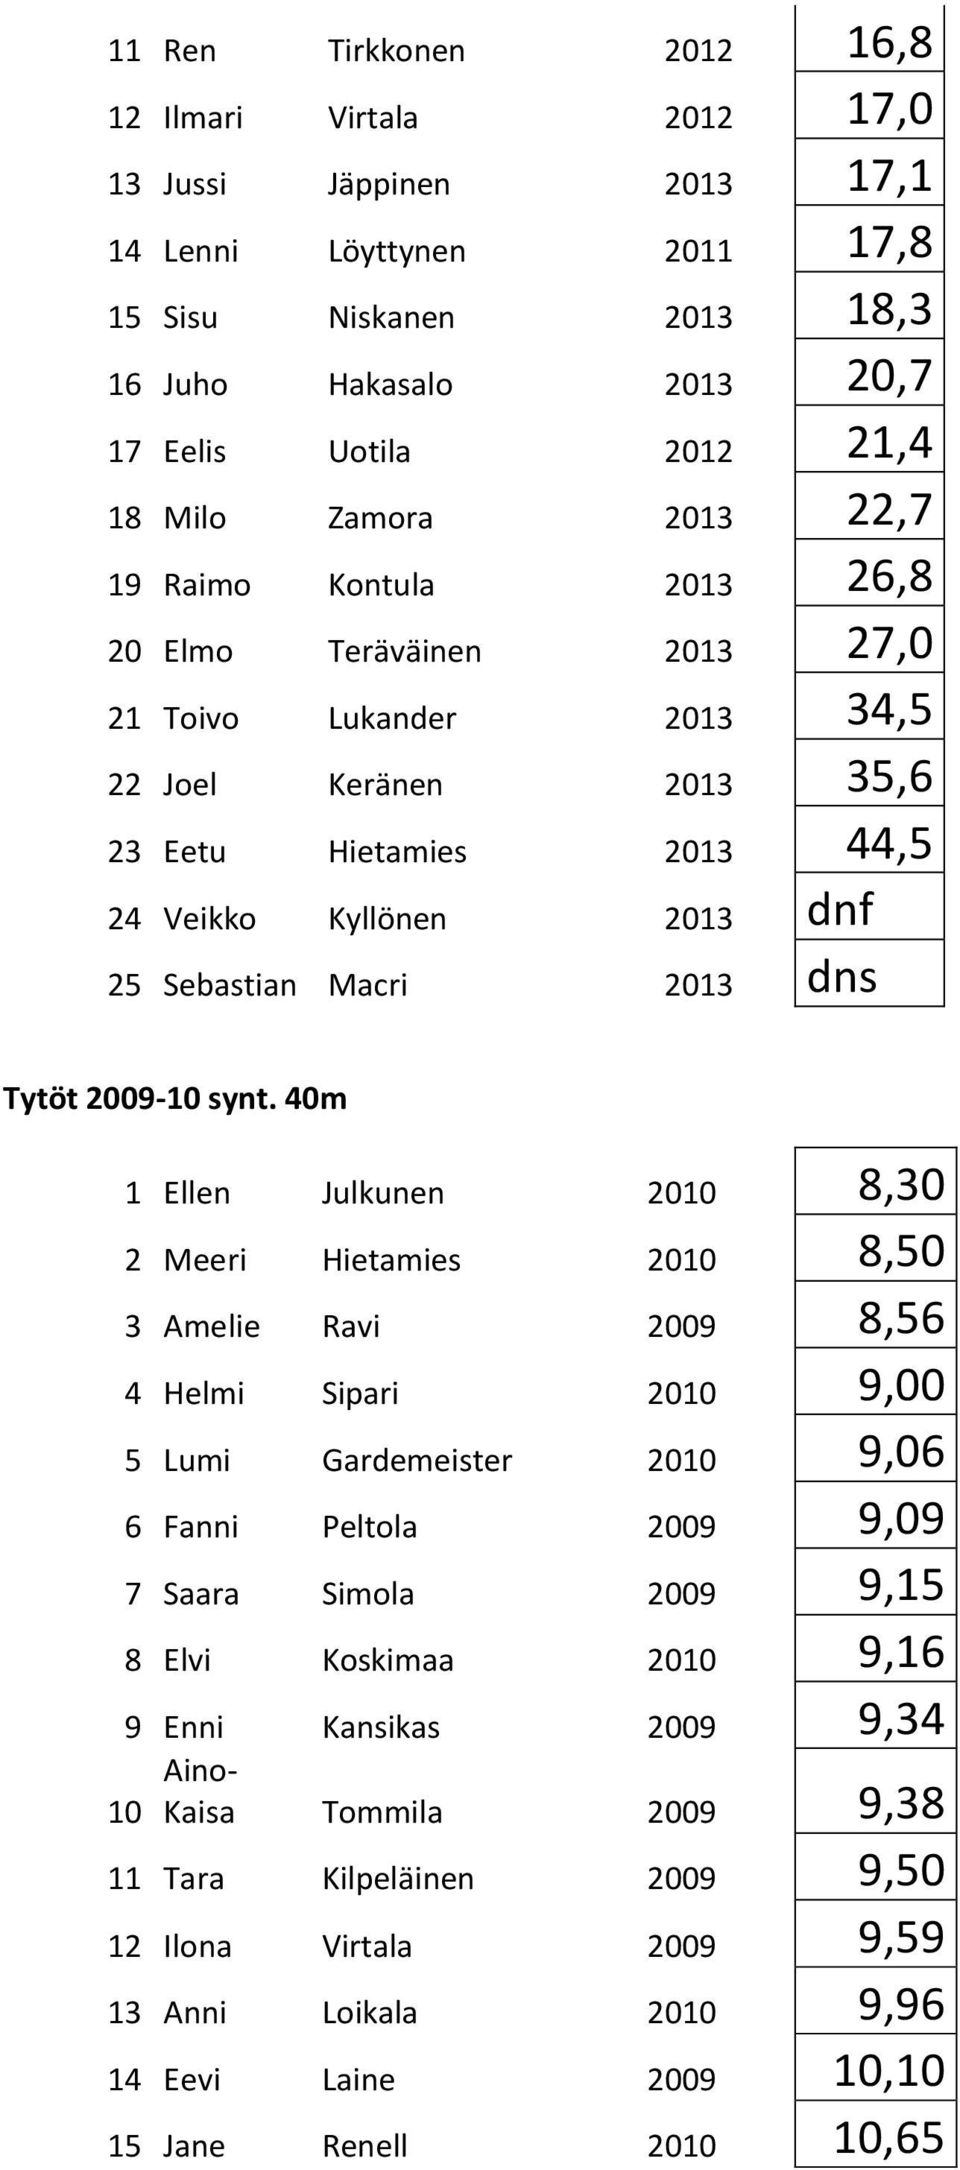 Macri 2013 dns Tytöt 2009-10 synt.